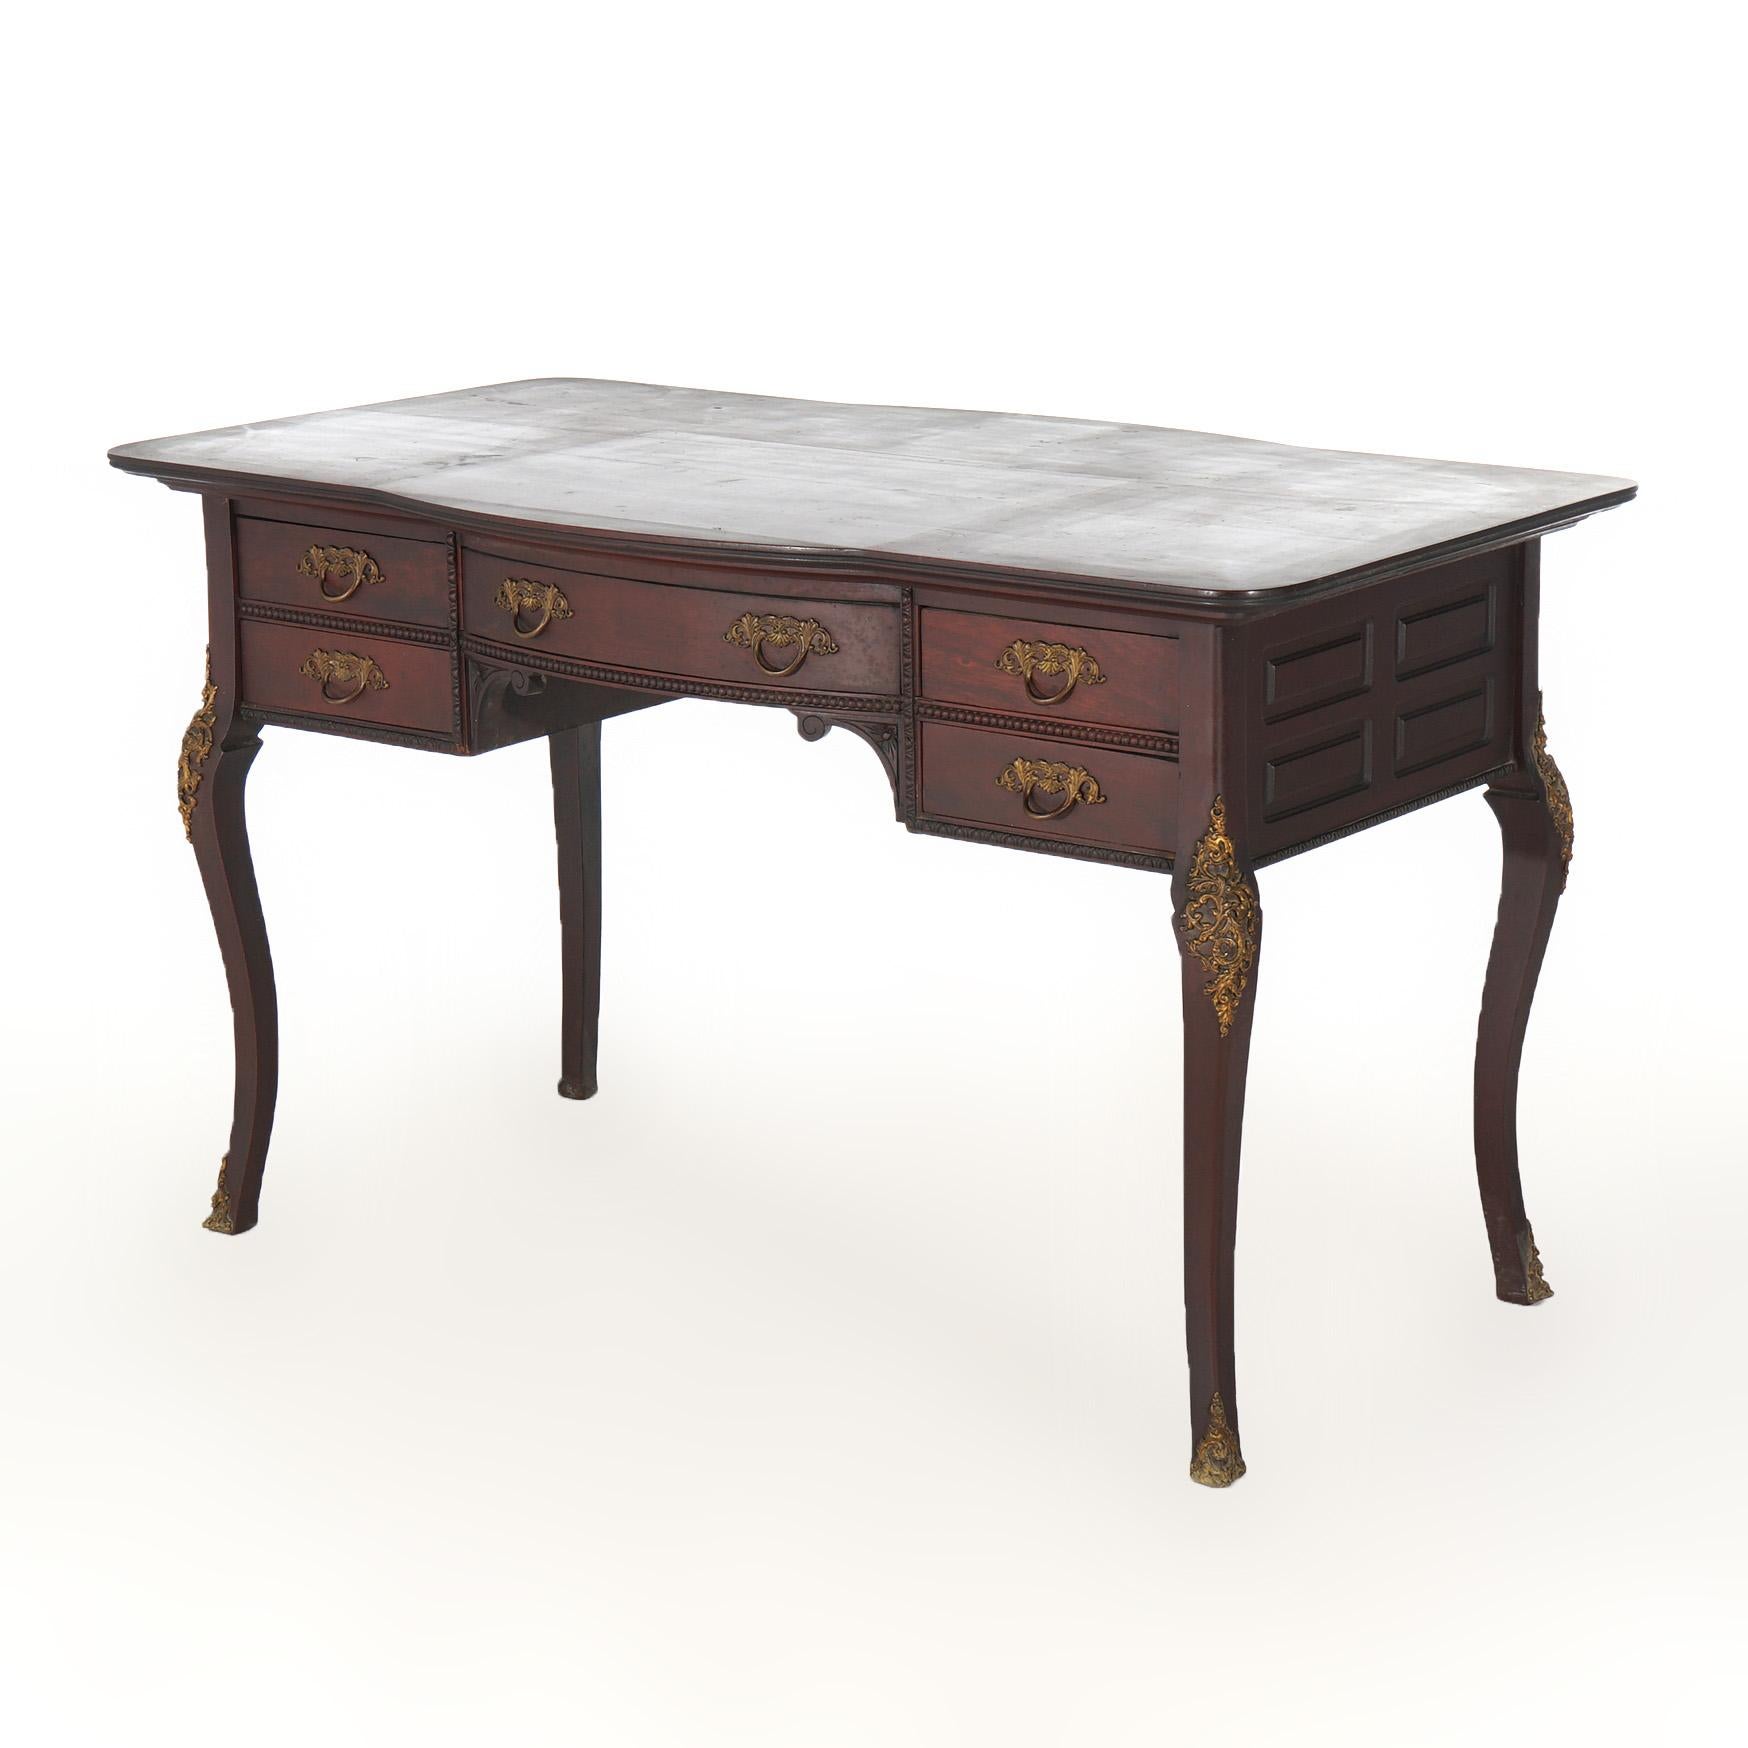 Antique French Mahogany & Ormolu Bureau Plat Writing Desk C1910 For Sale 10